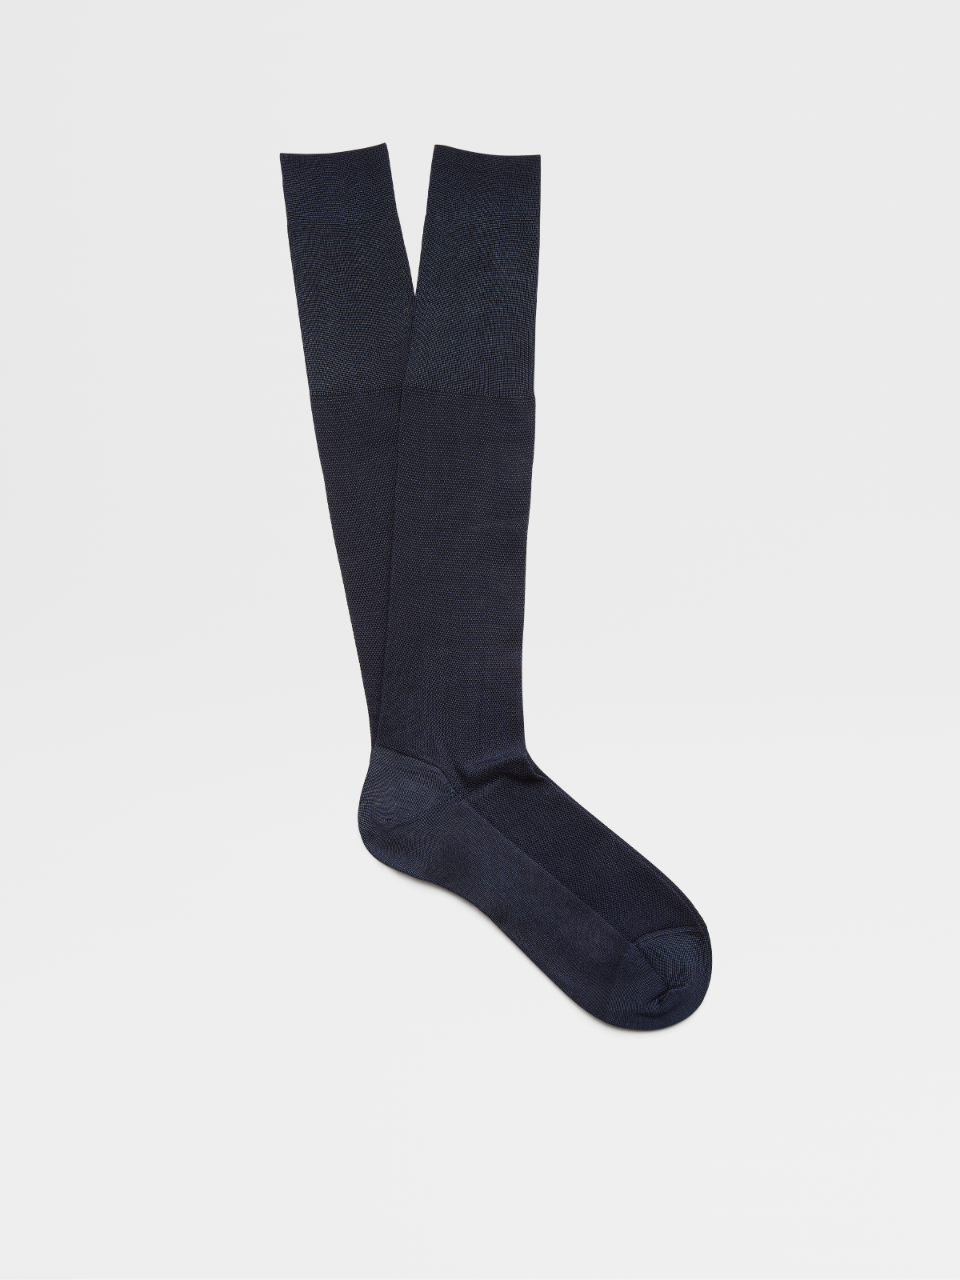 Navy Blue Silk Blend Mid Calf Socks